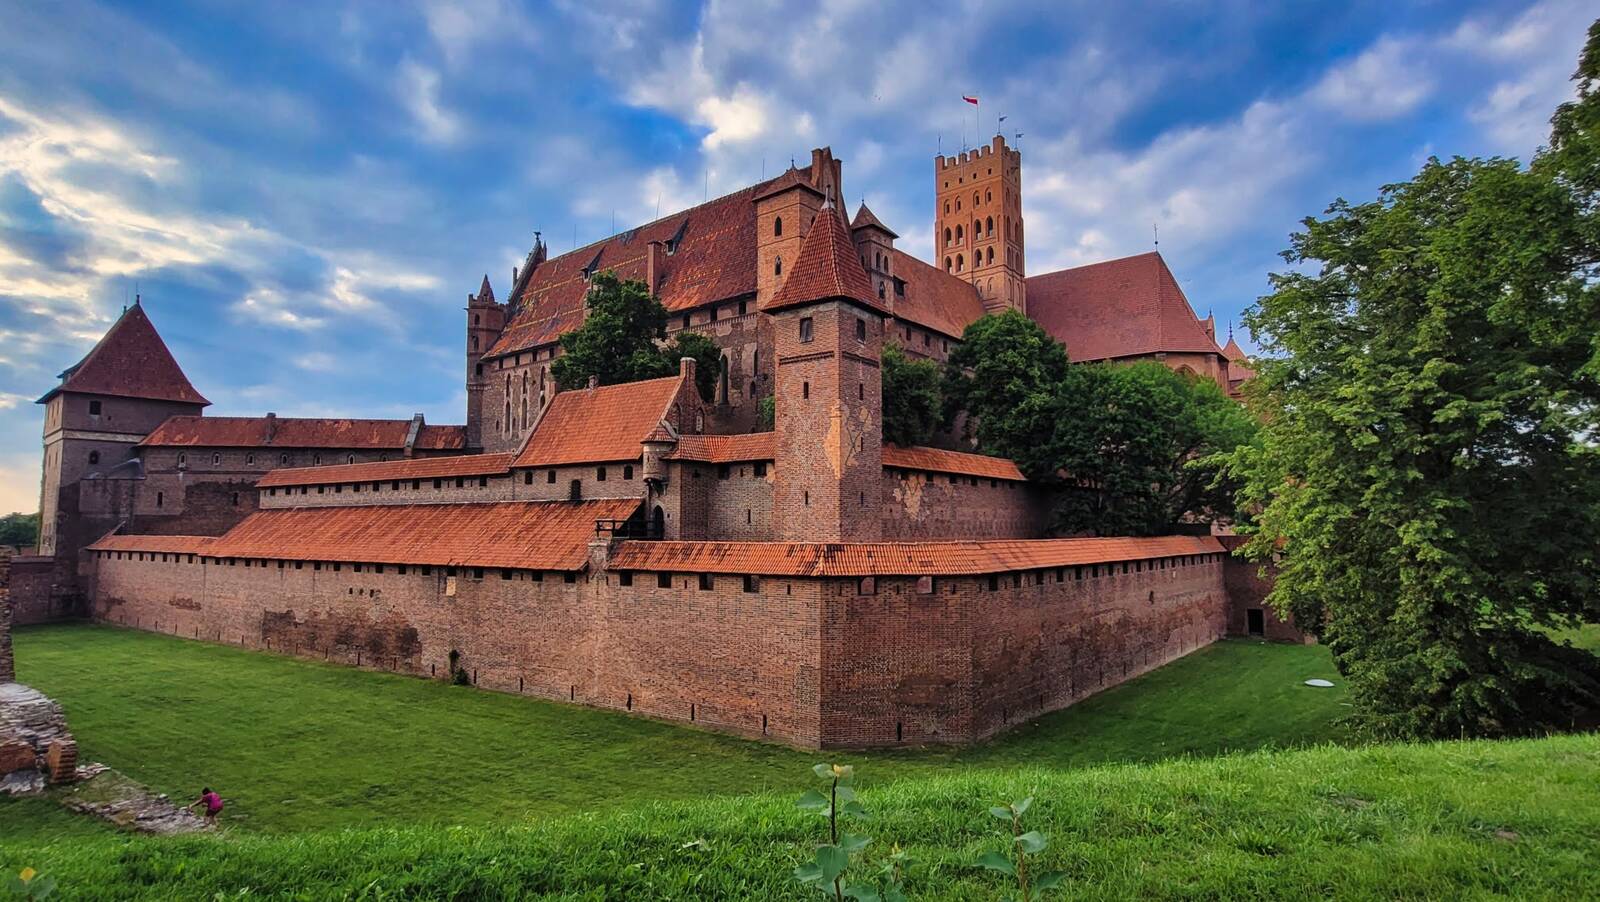 Image of Malbork Castle by Lloyd De Jongh